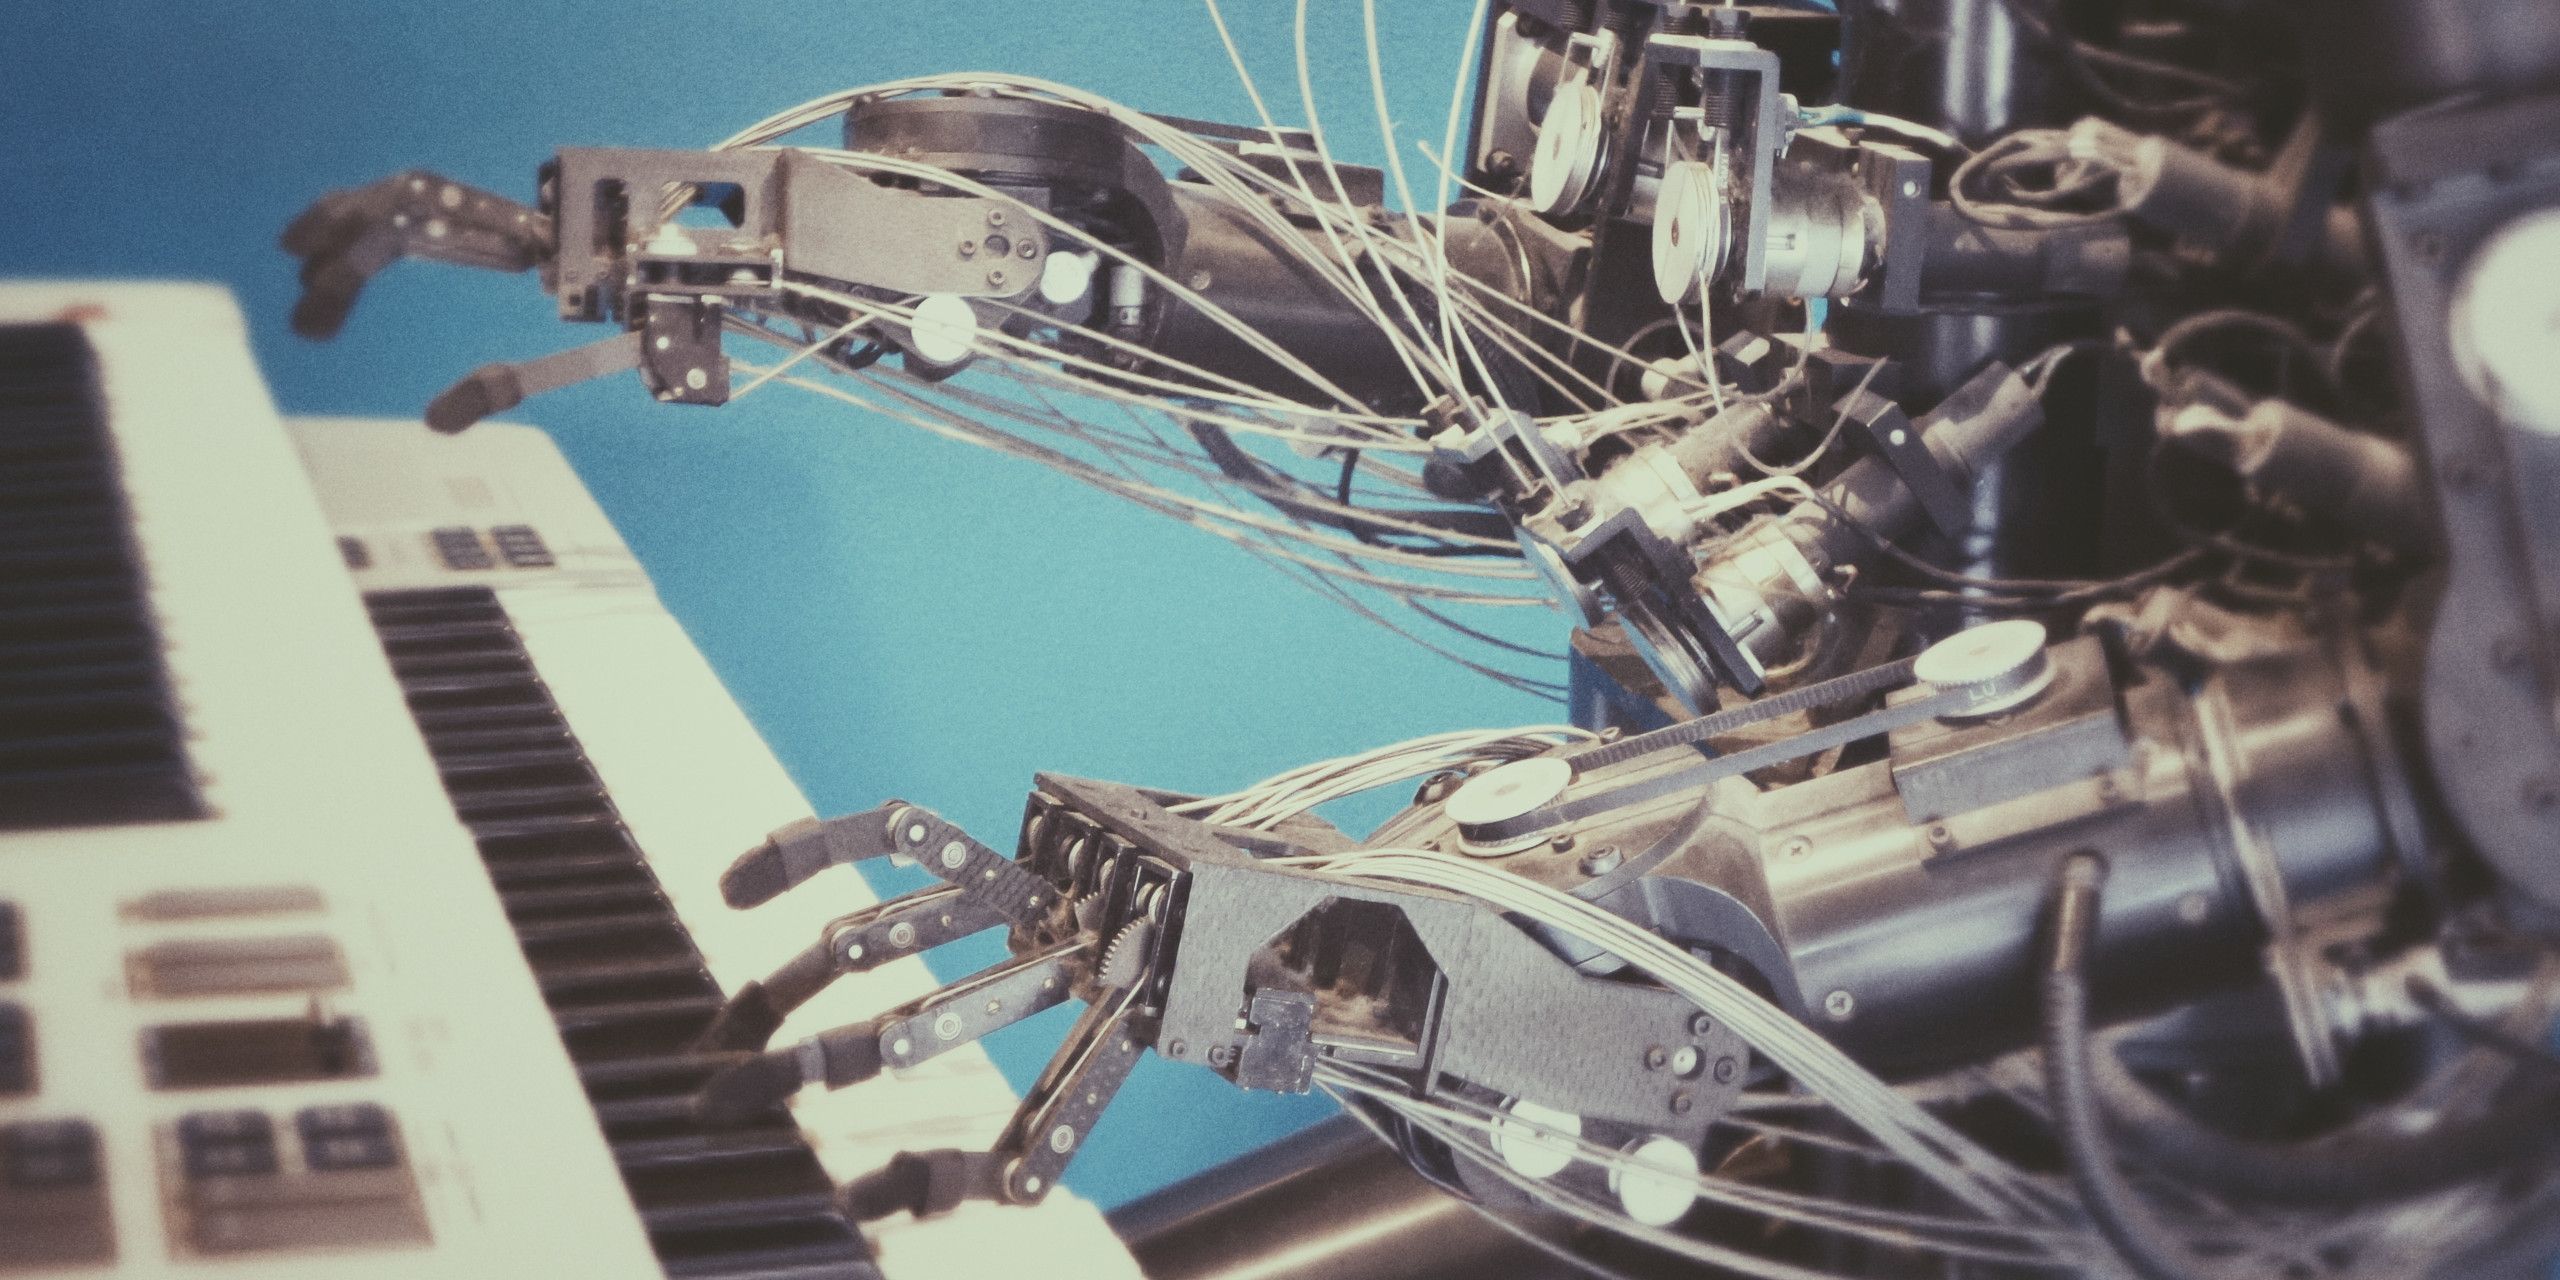 Robot playing a keyboard